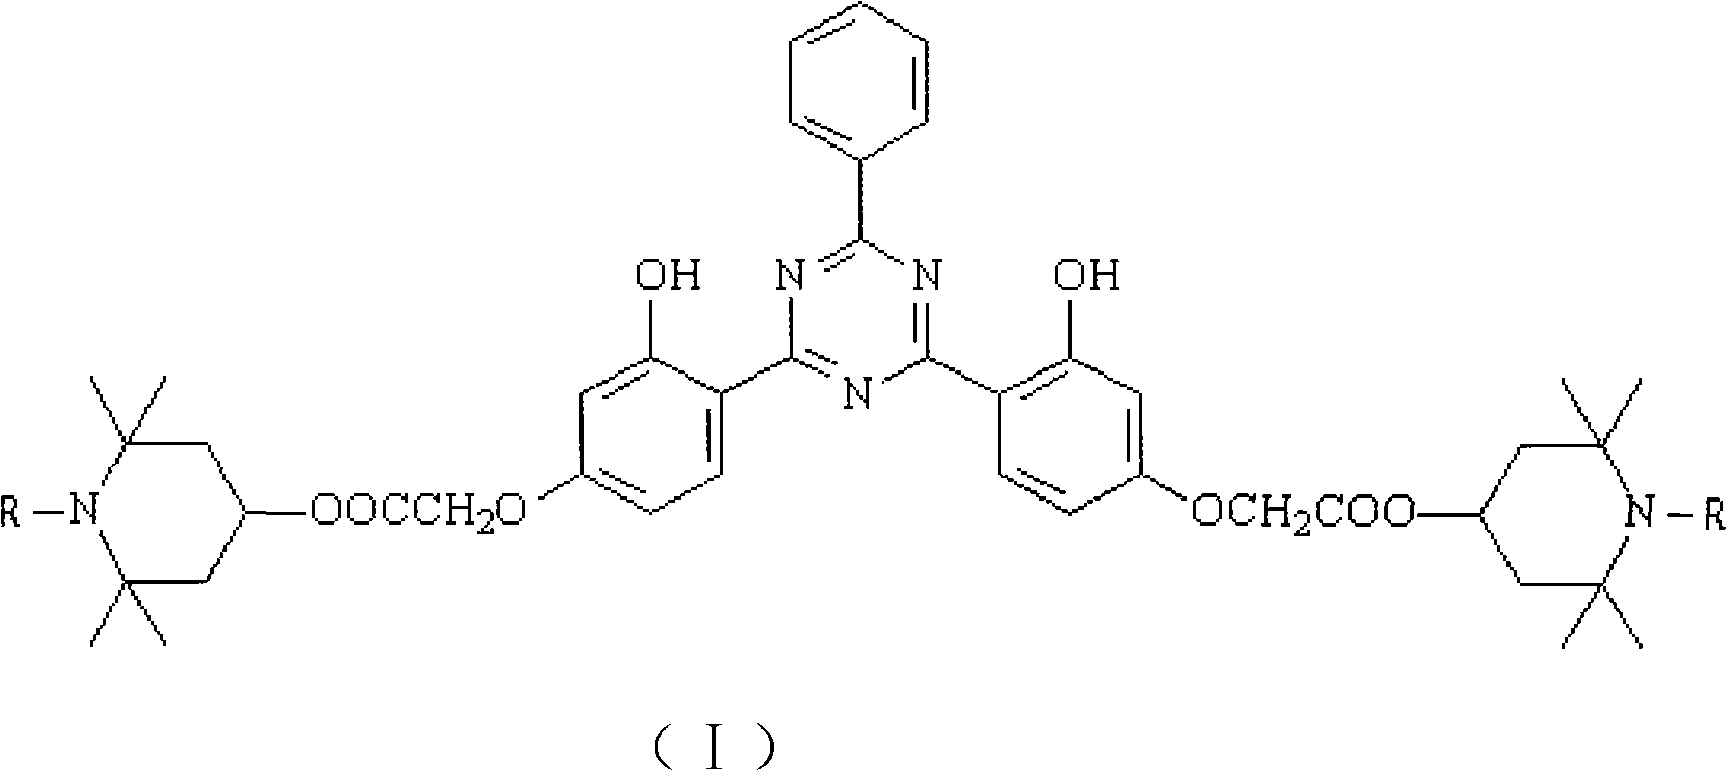 Triazine light stabilizer containing hindered amine groups